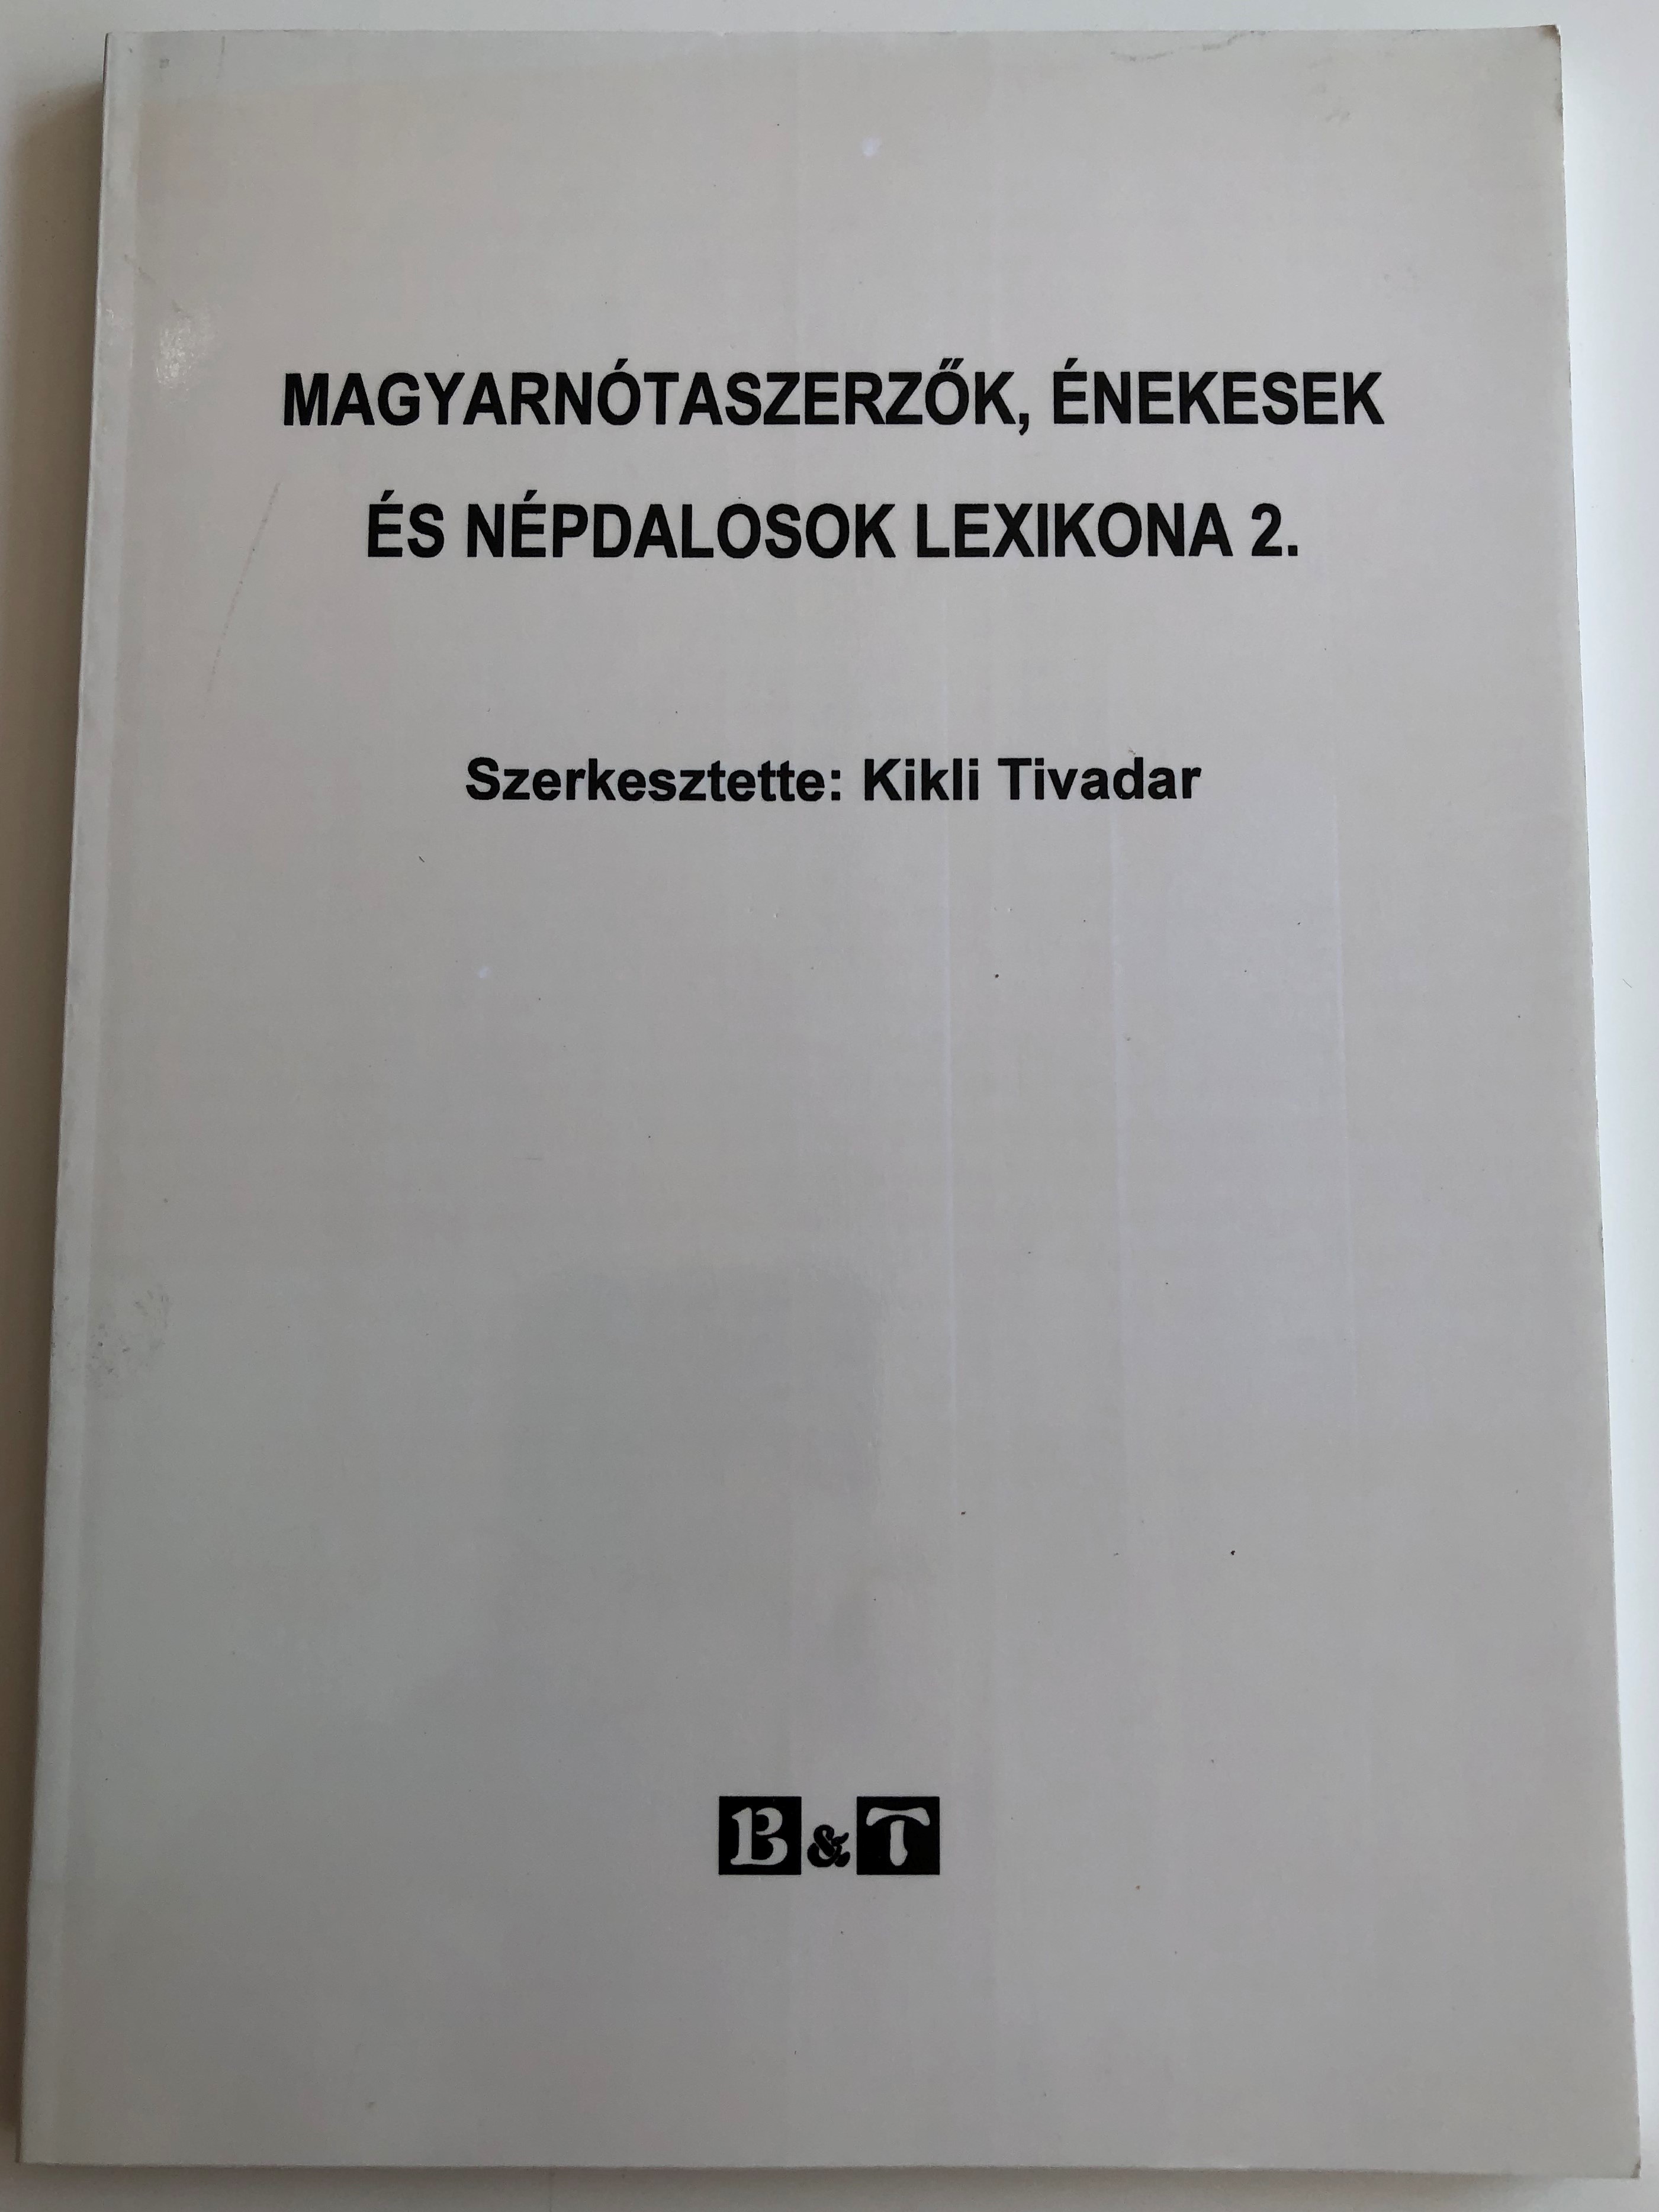 magyarn-taszerz-k-nekesek-s-n-pdalosok-lexikona-2.-by-kikli-tivadar-hungarian-folk-music-lexicon-of-songwriters-and-singers-b-ba-kiad-2004-paperback-1-.jpg